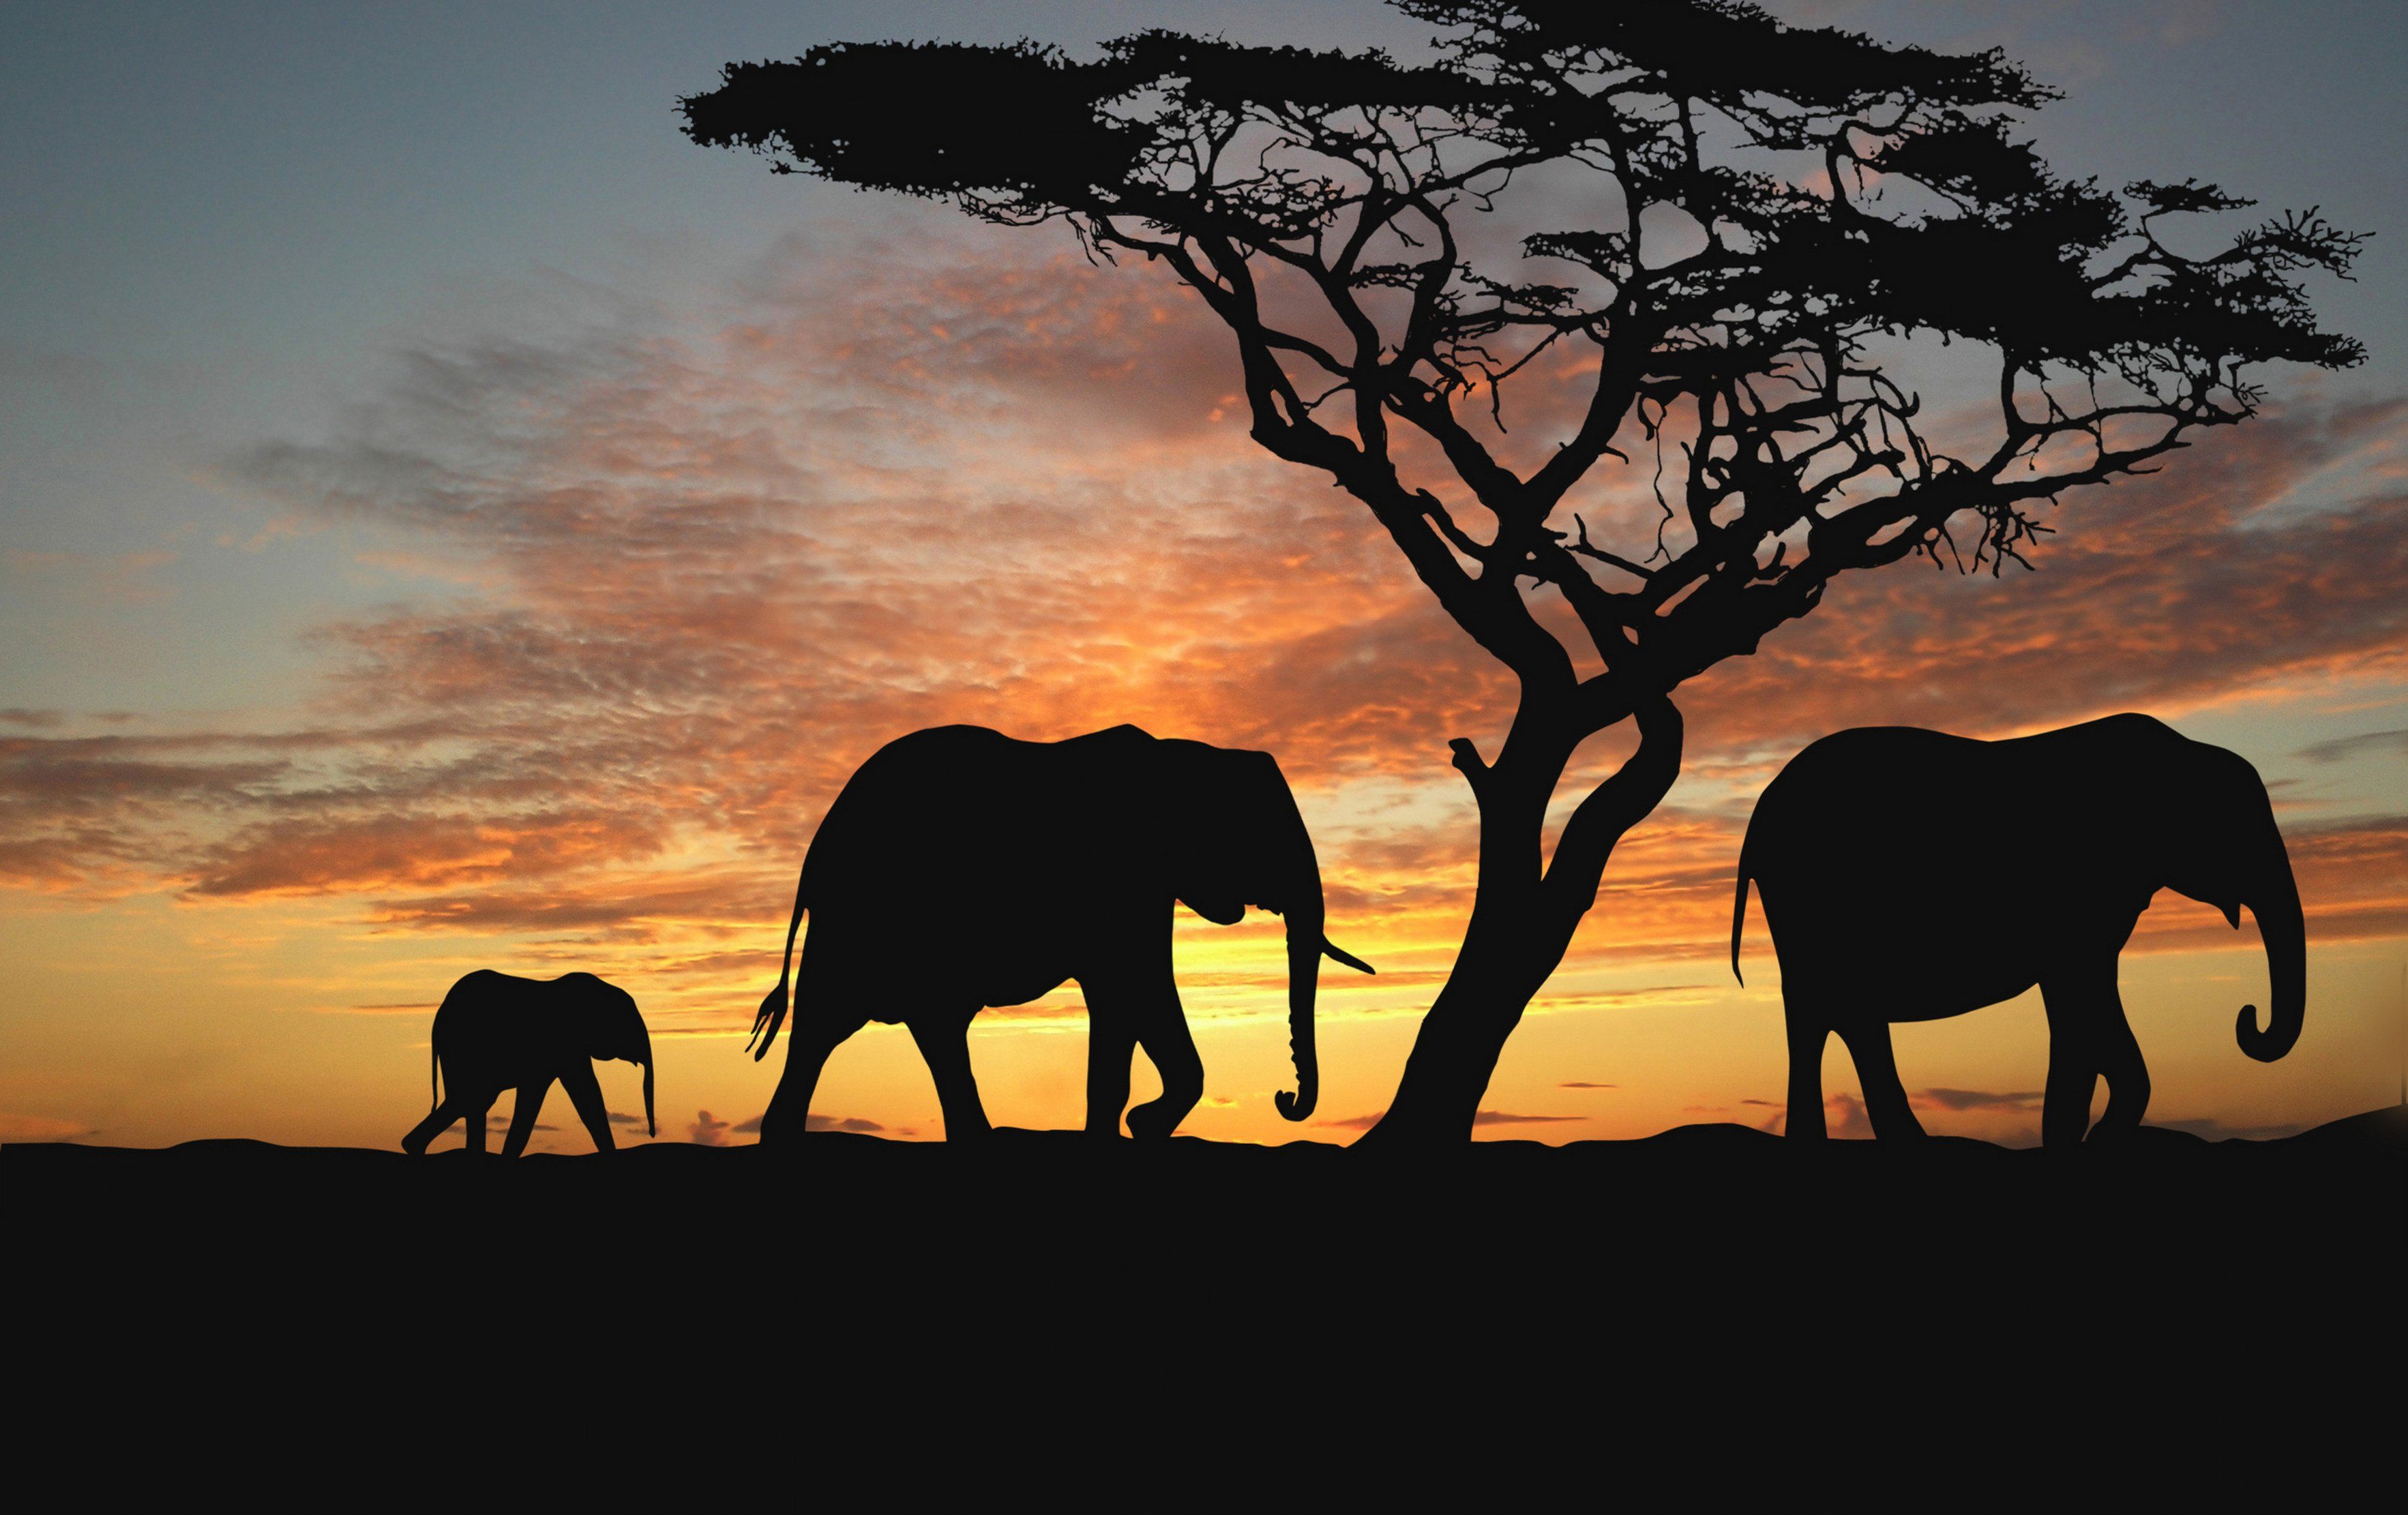 Sunset africa elephants nature animals wallpaper evening africa trees savannah animals wallpaperx2222